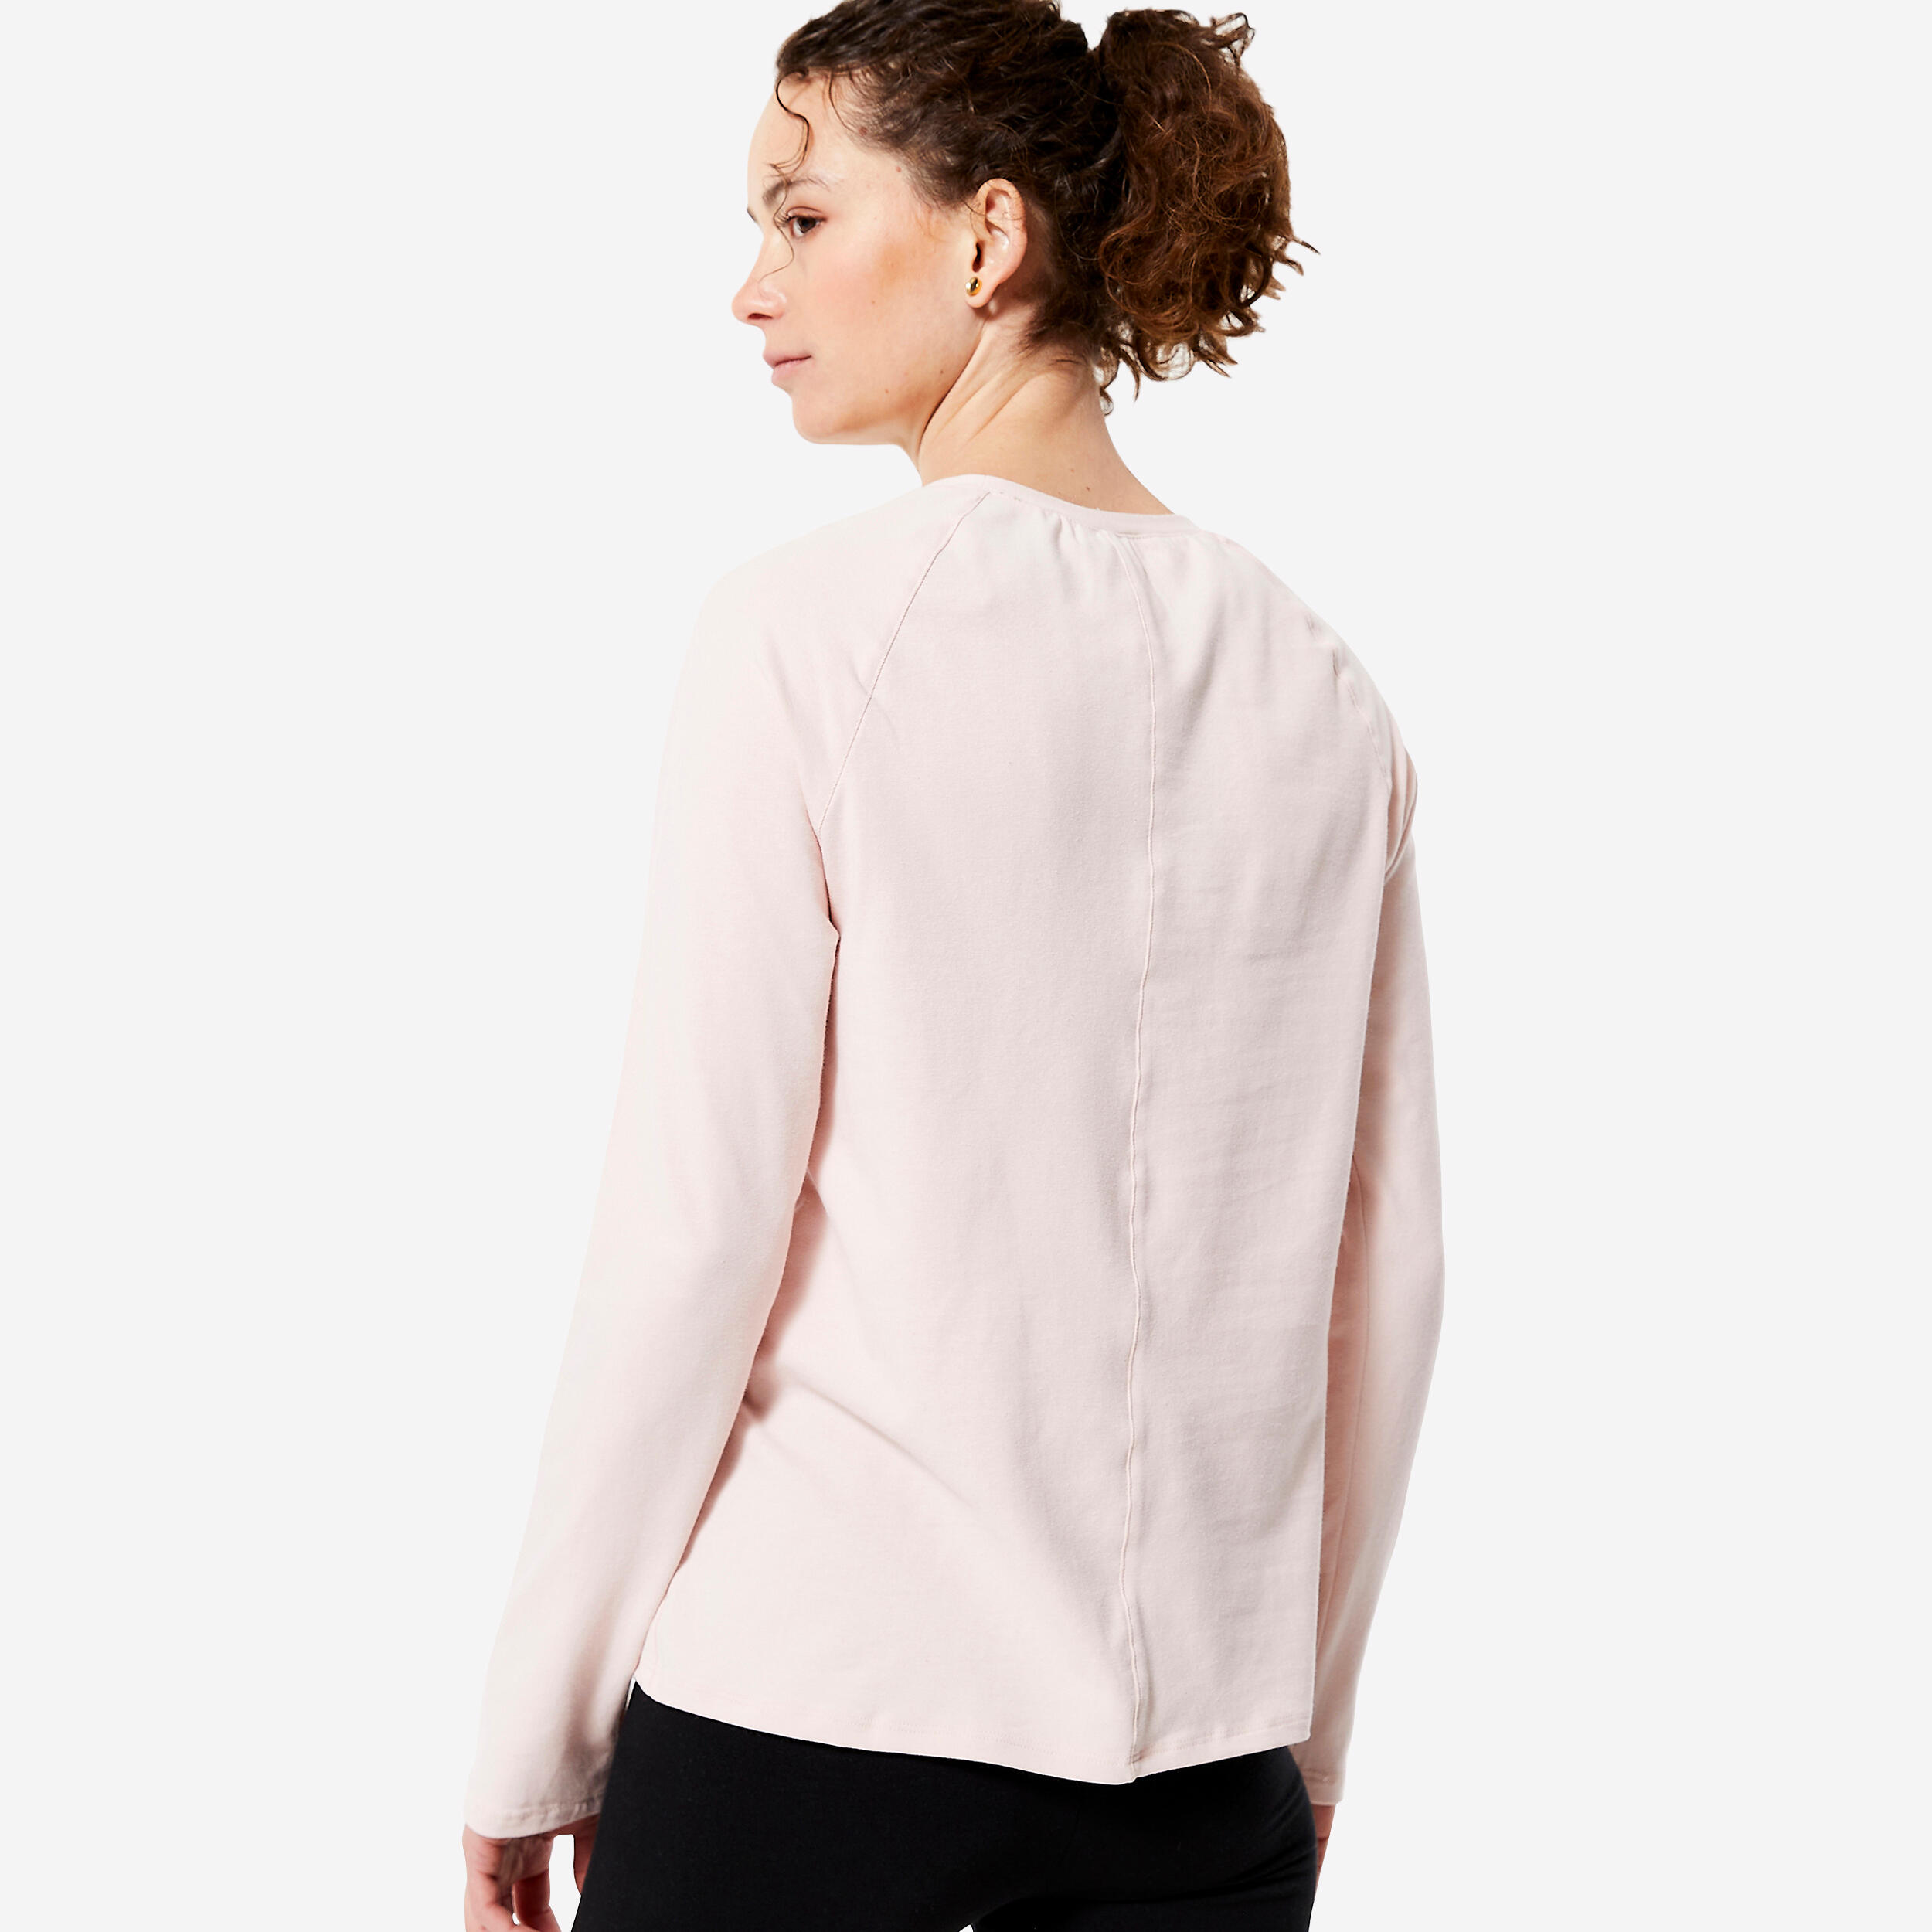 Women's Long-Sleeved Fitness T-Shirt 500 - Pink 4/6